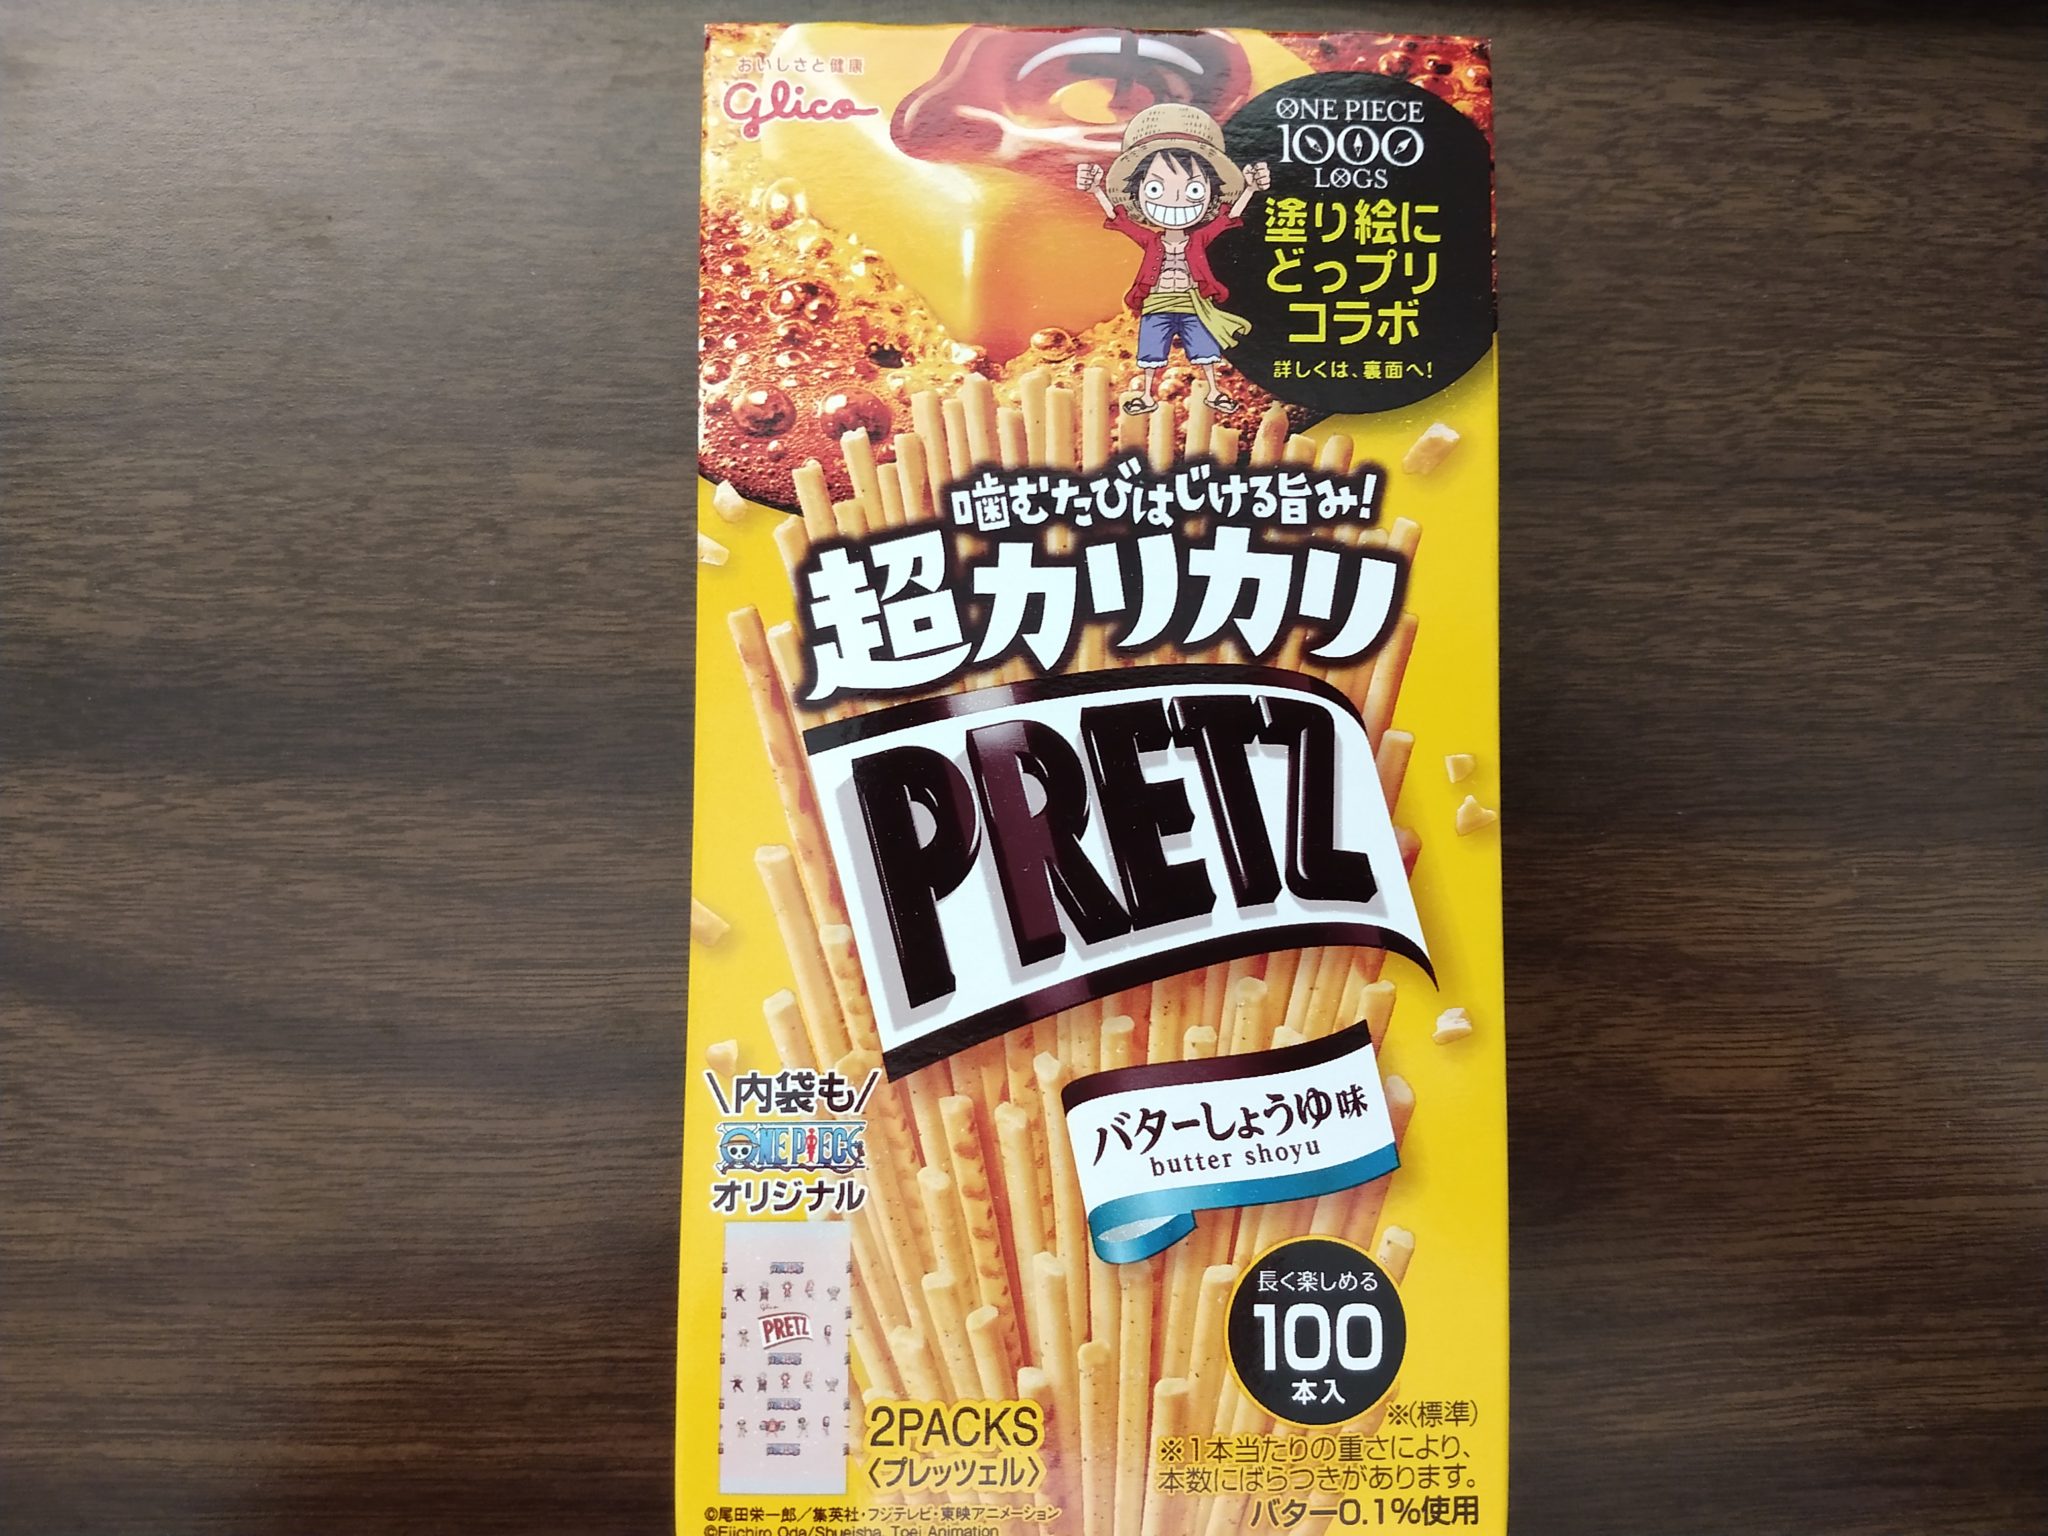 Pretz – Crispy Butter Shoyu